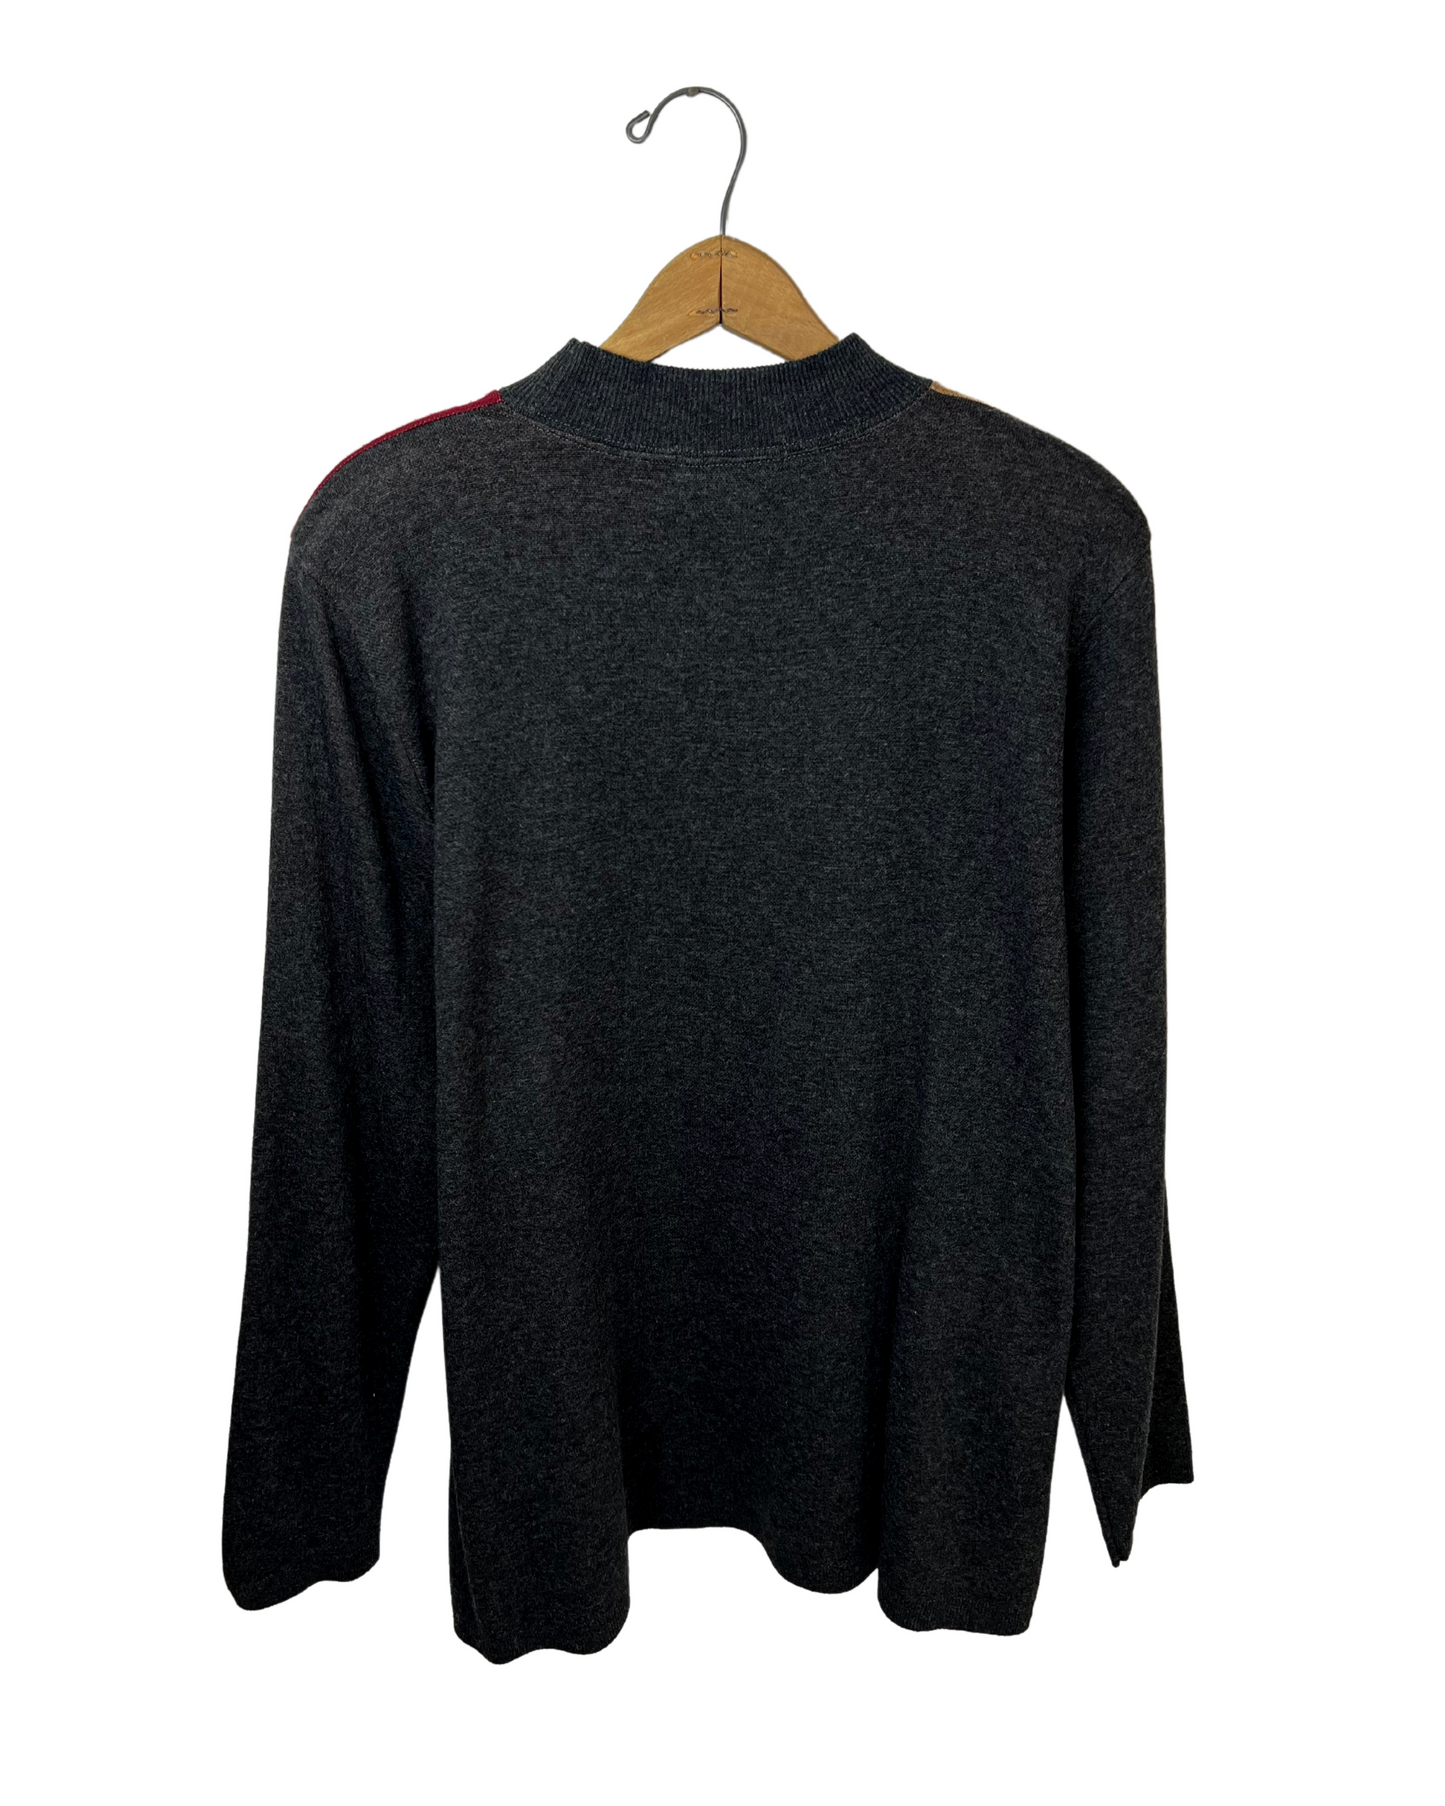 90’s Mod Square Mockneck Sweater